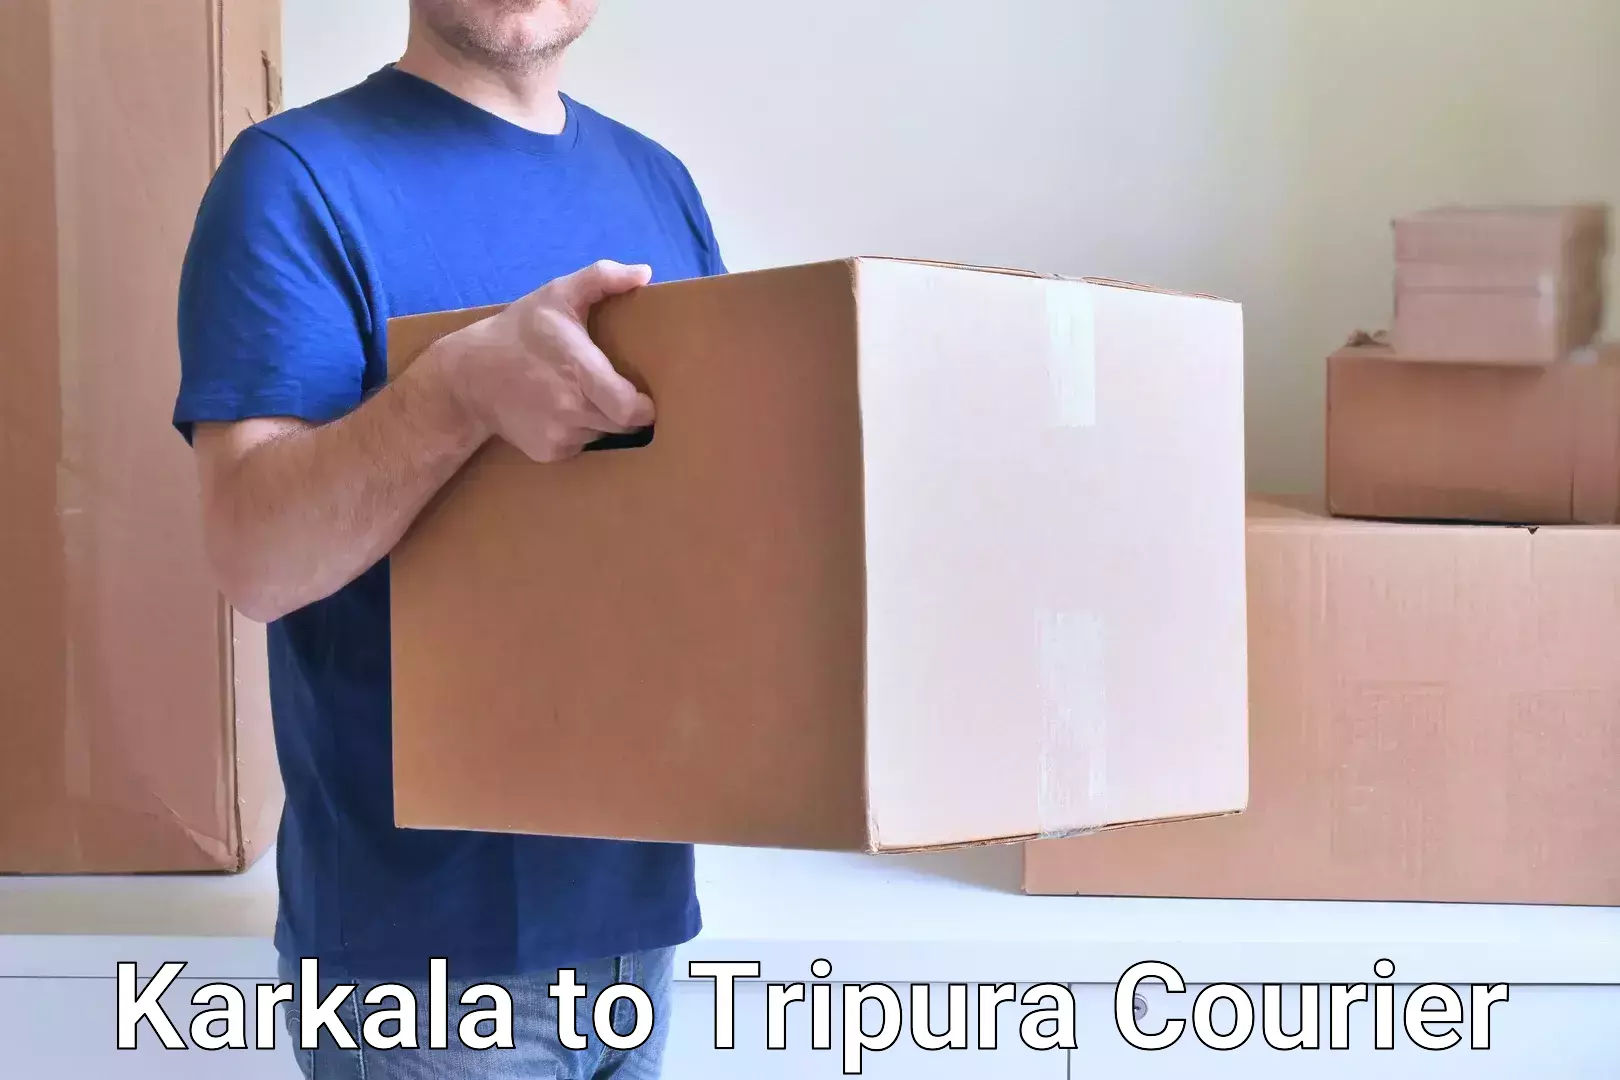 Courier service innovation Karkala to Udaipur Tripura